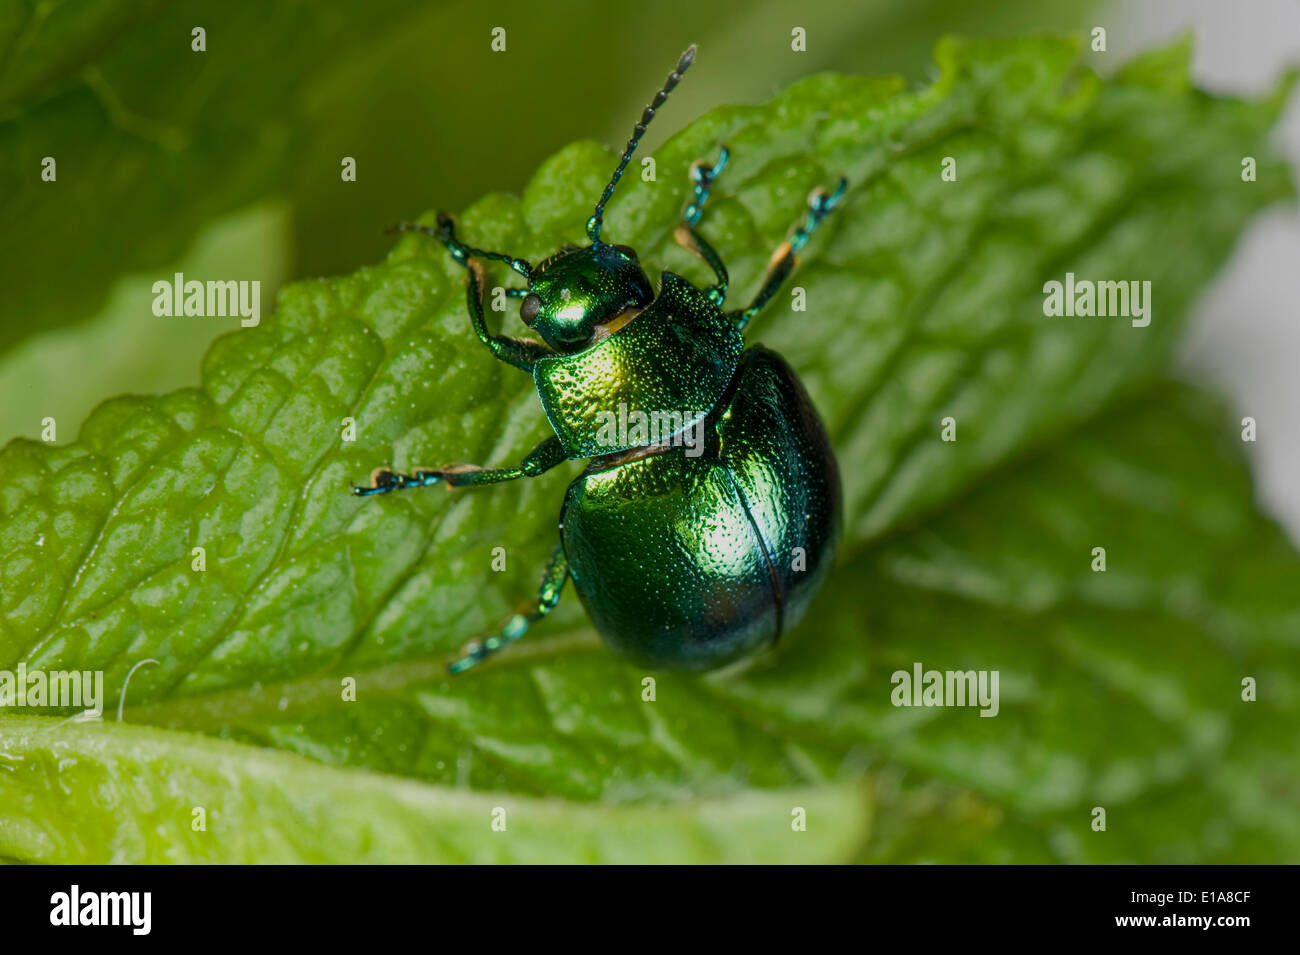 A mint leaf beetle, Chrysolina herbacea, on a mint leaf Stock Photo